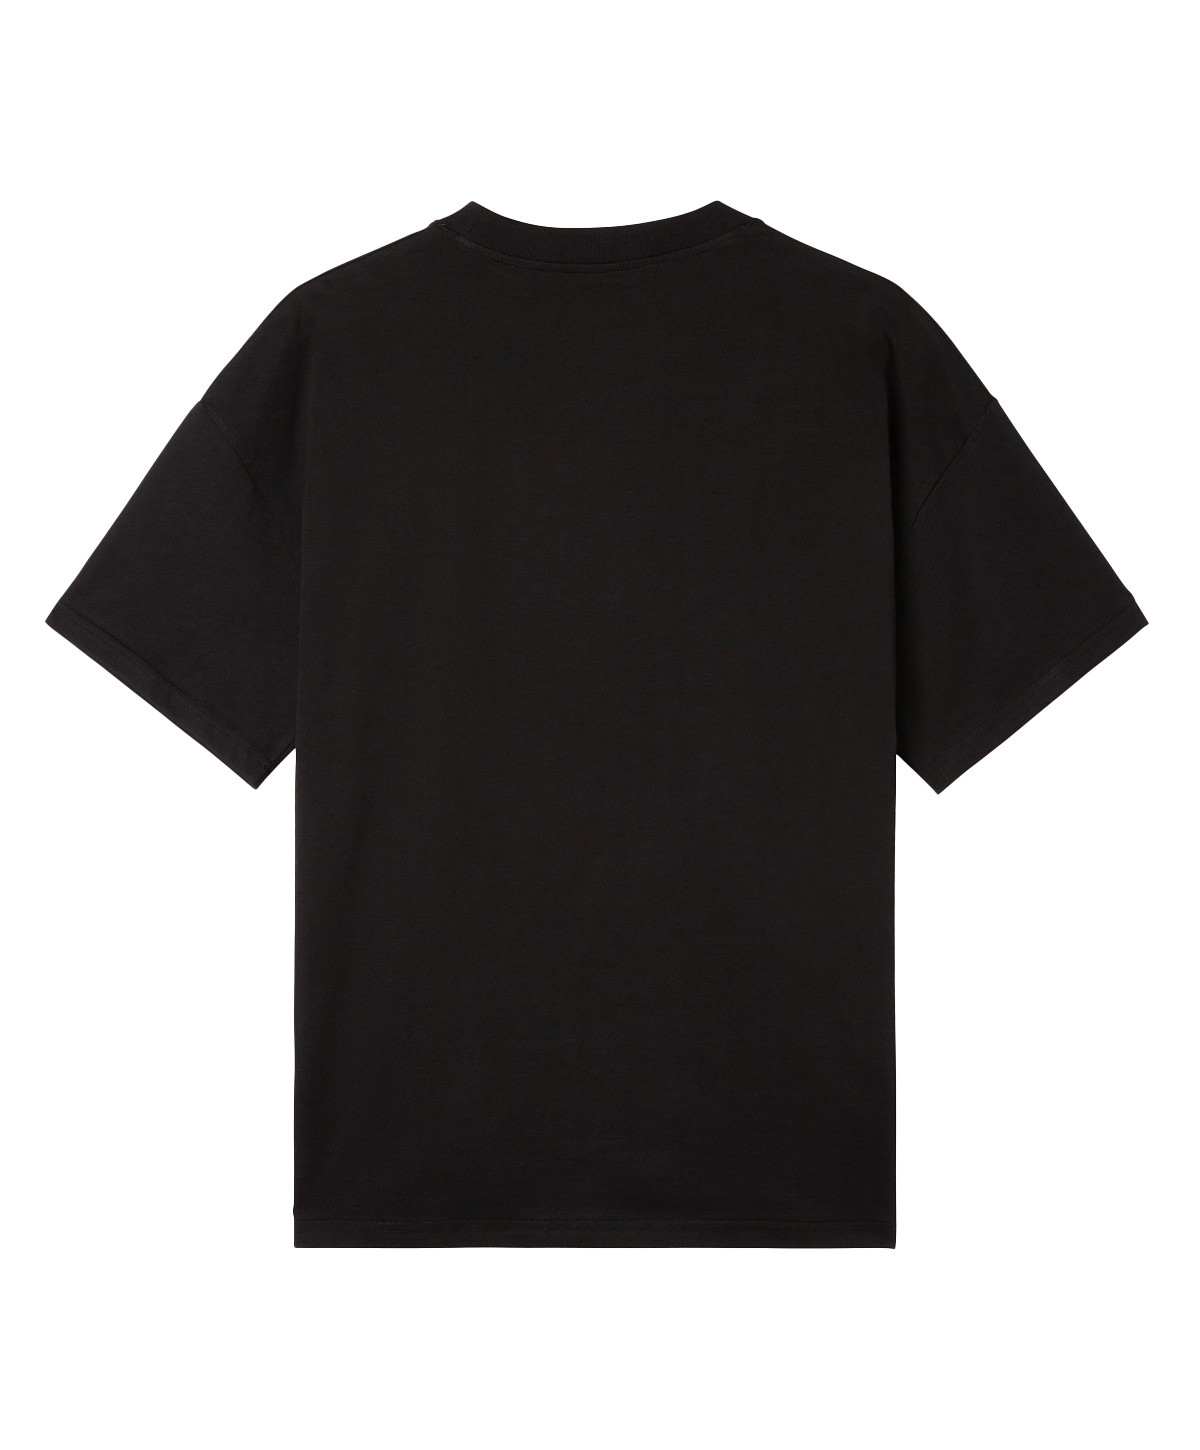 Funky - T-shirt girocollo con logo ovale, Nero, large image number 1